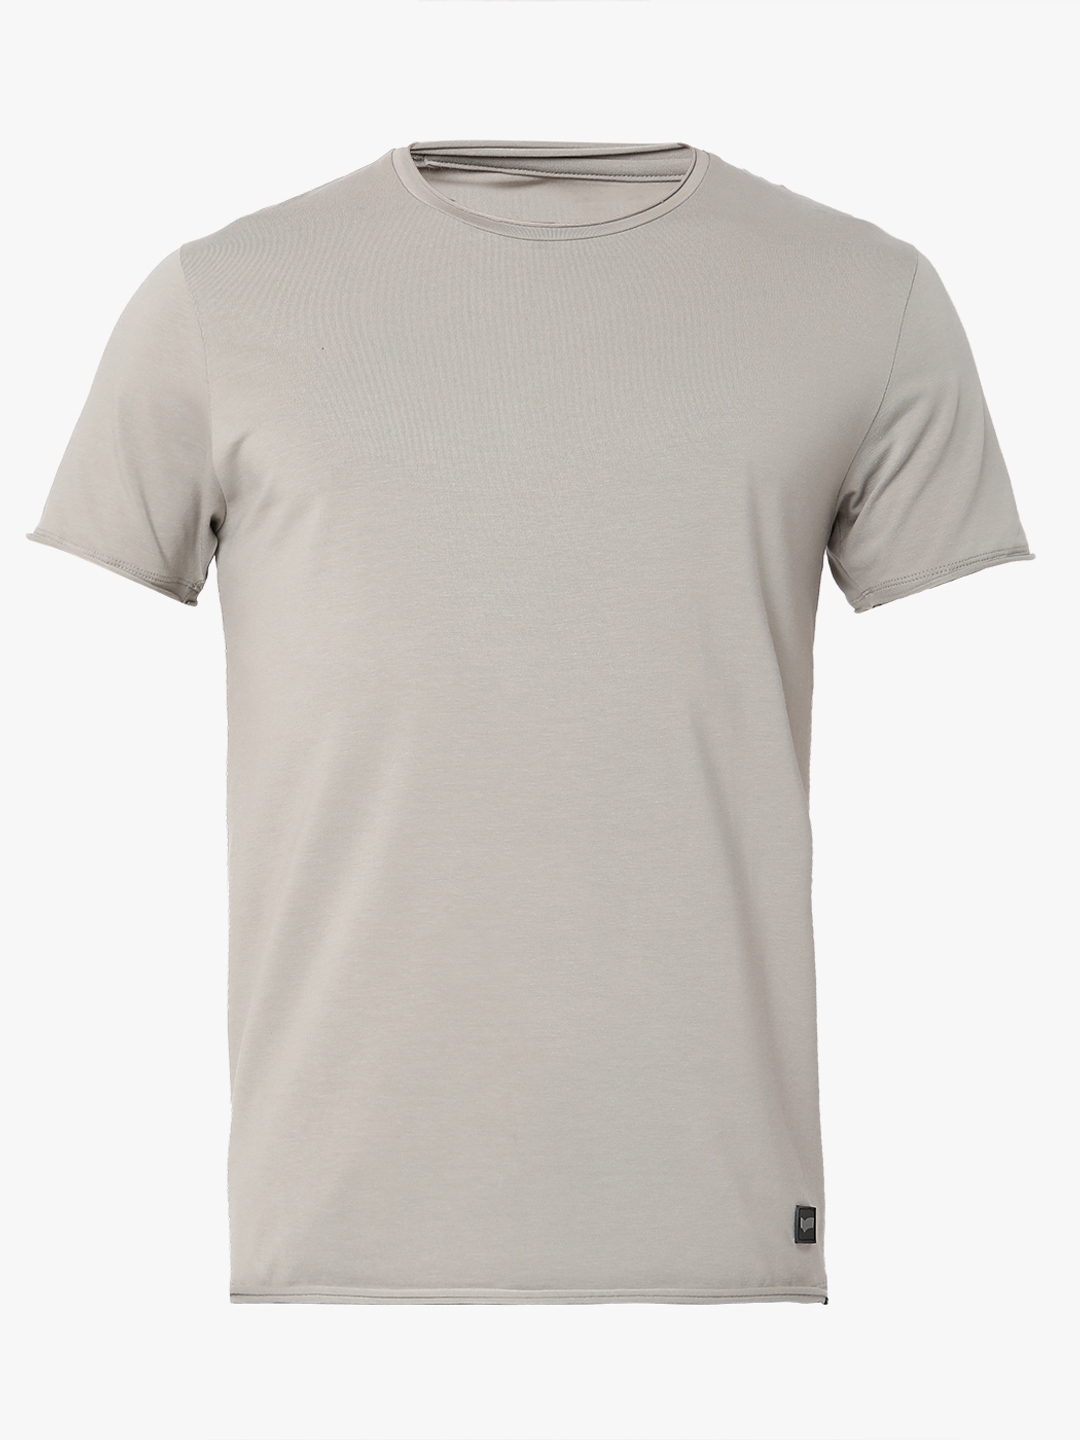 Men's SCUBA BASIC IN T-Shirt